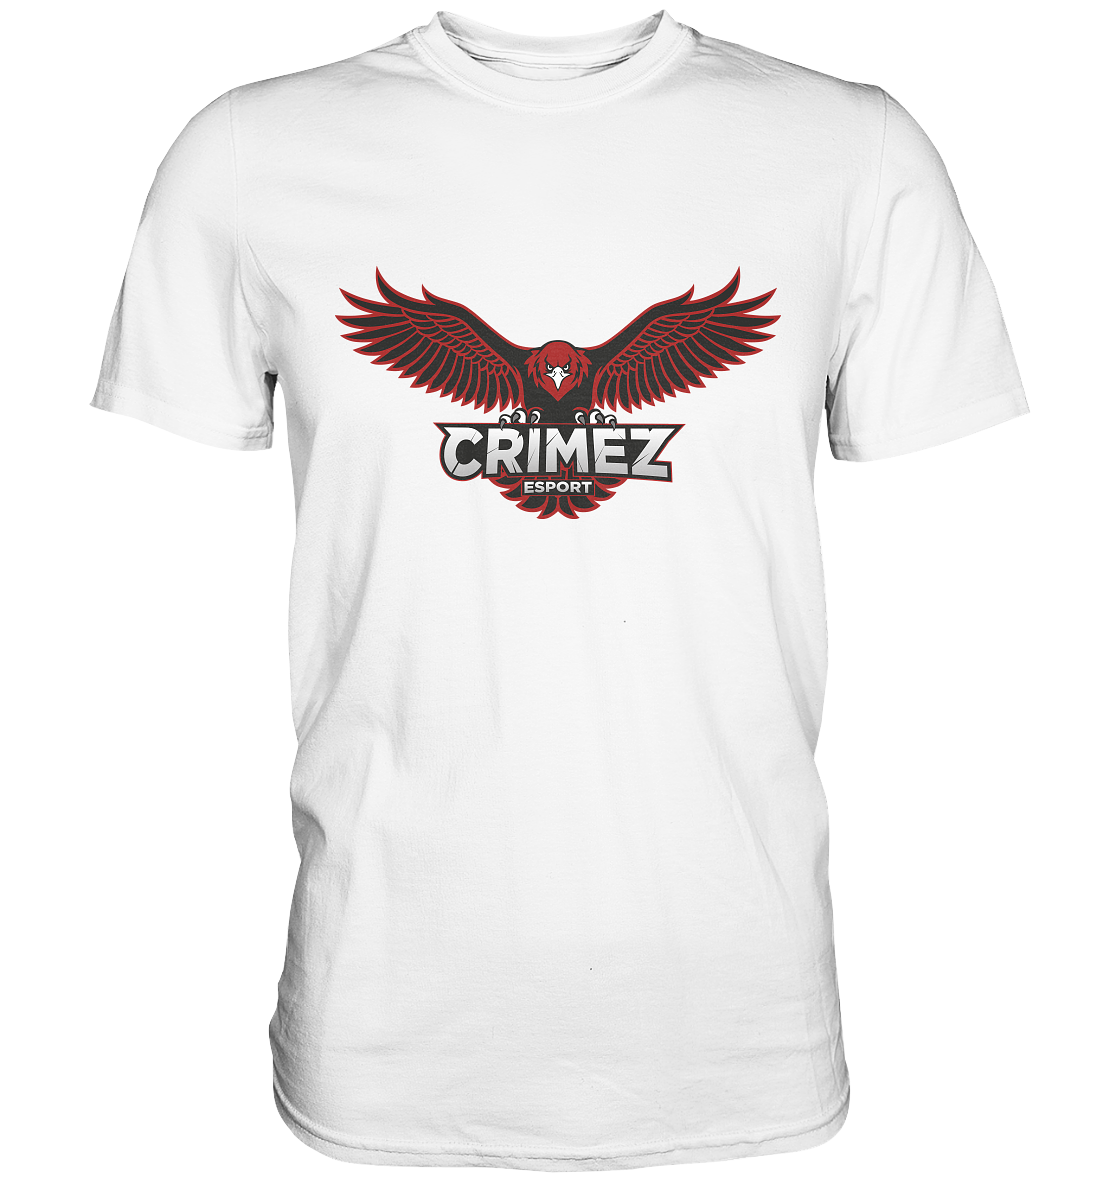 CRIMEZ ESPORT - Basic Shirt